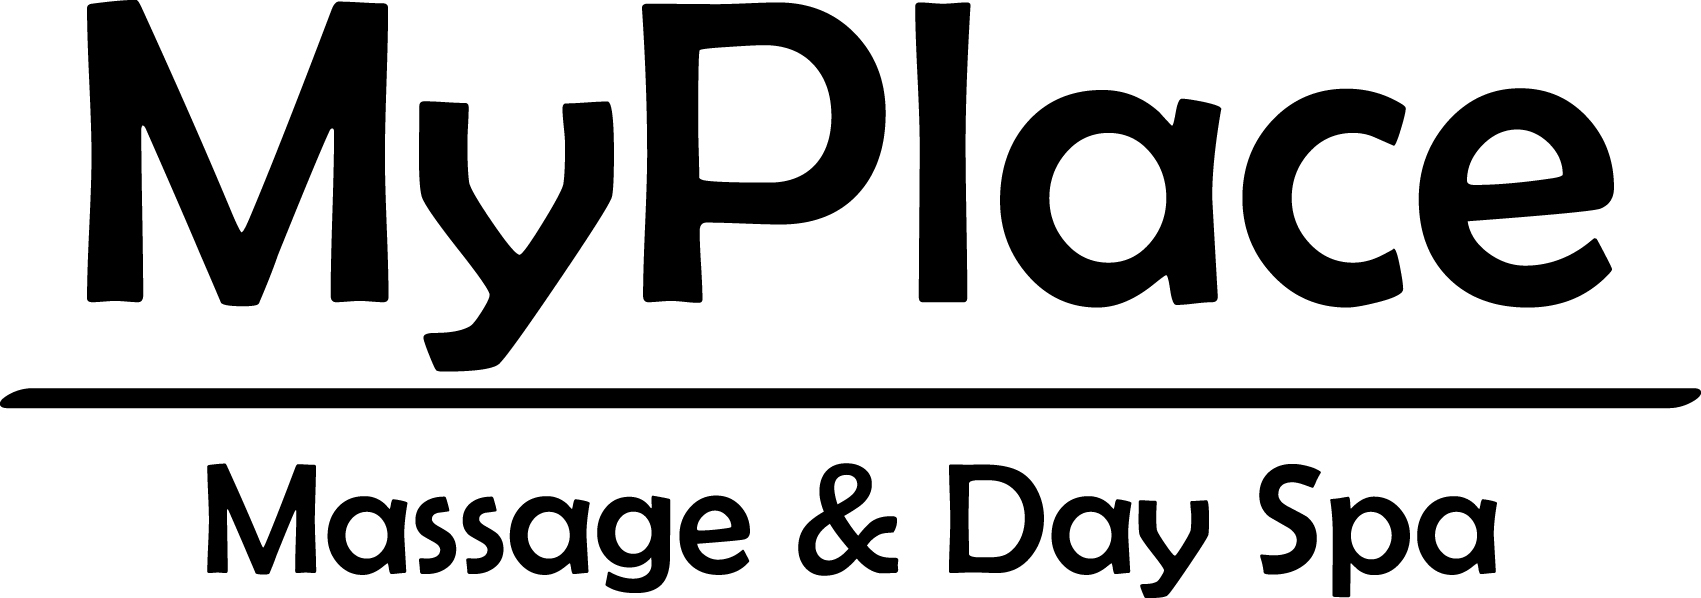 MyPlace Massage & Day Spa 